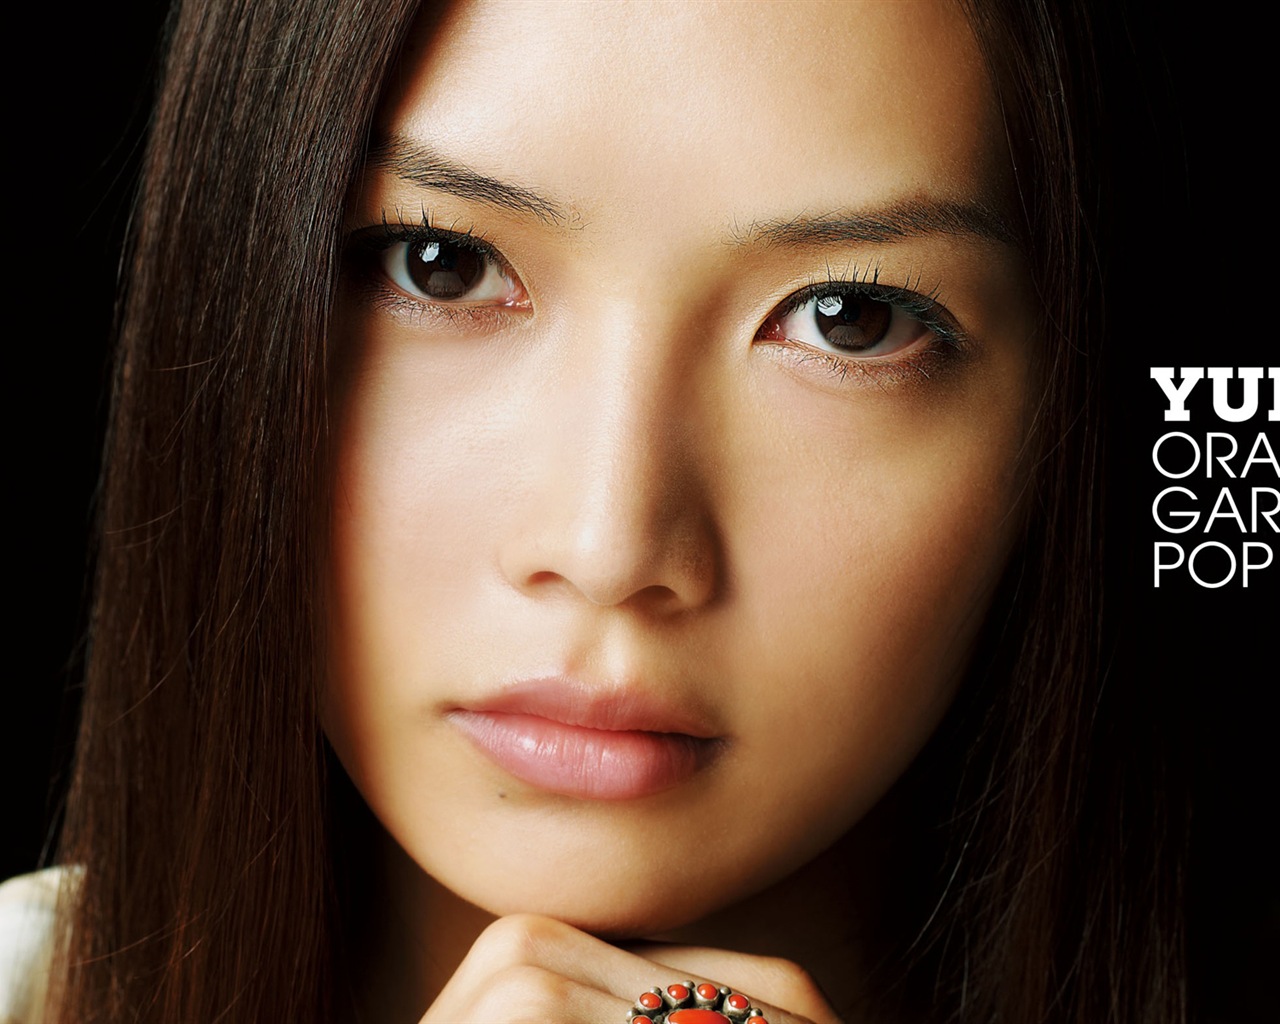 Japanese singer Yoshioka Yui HD wallpapers #20 - 1280x1024